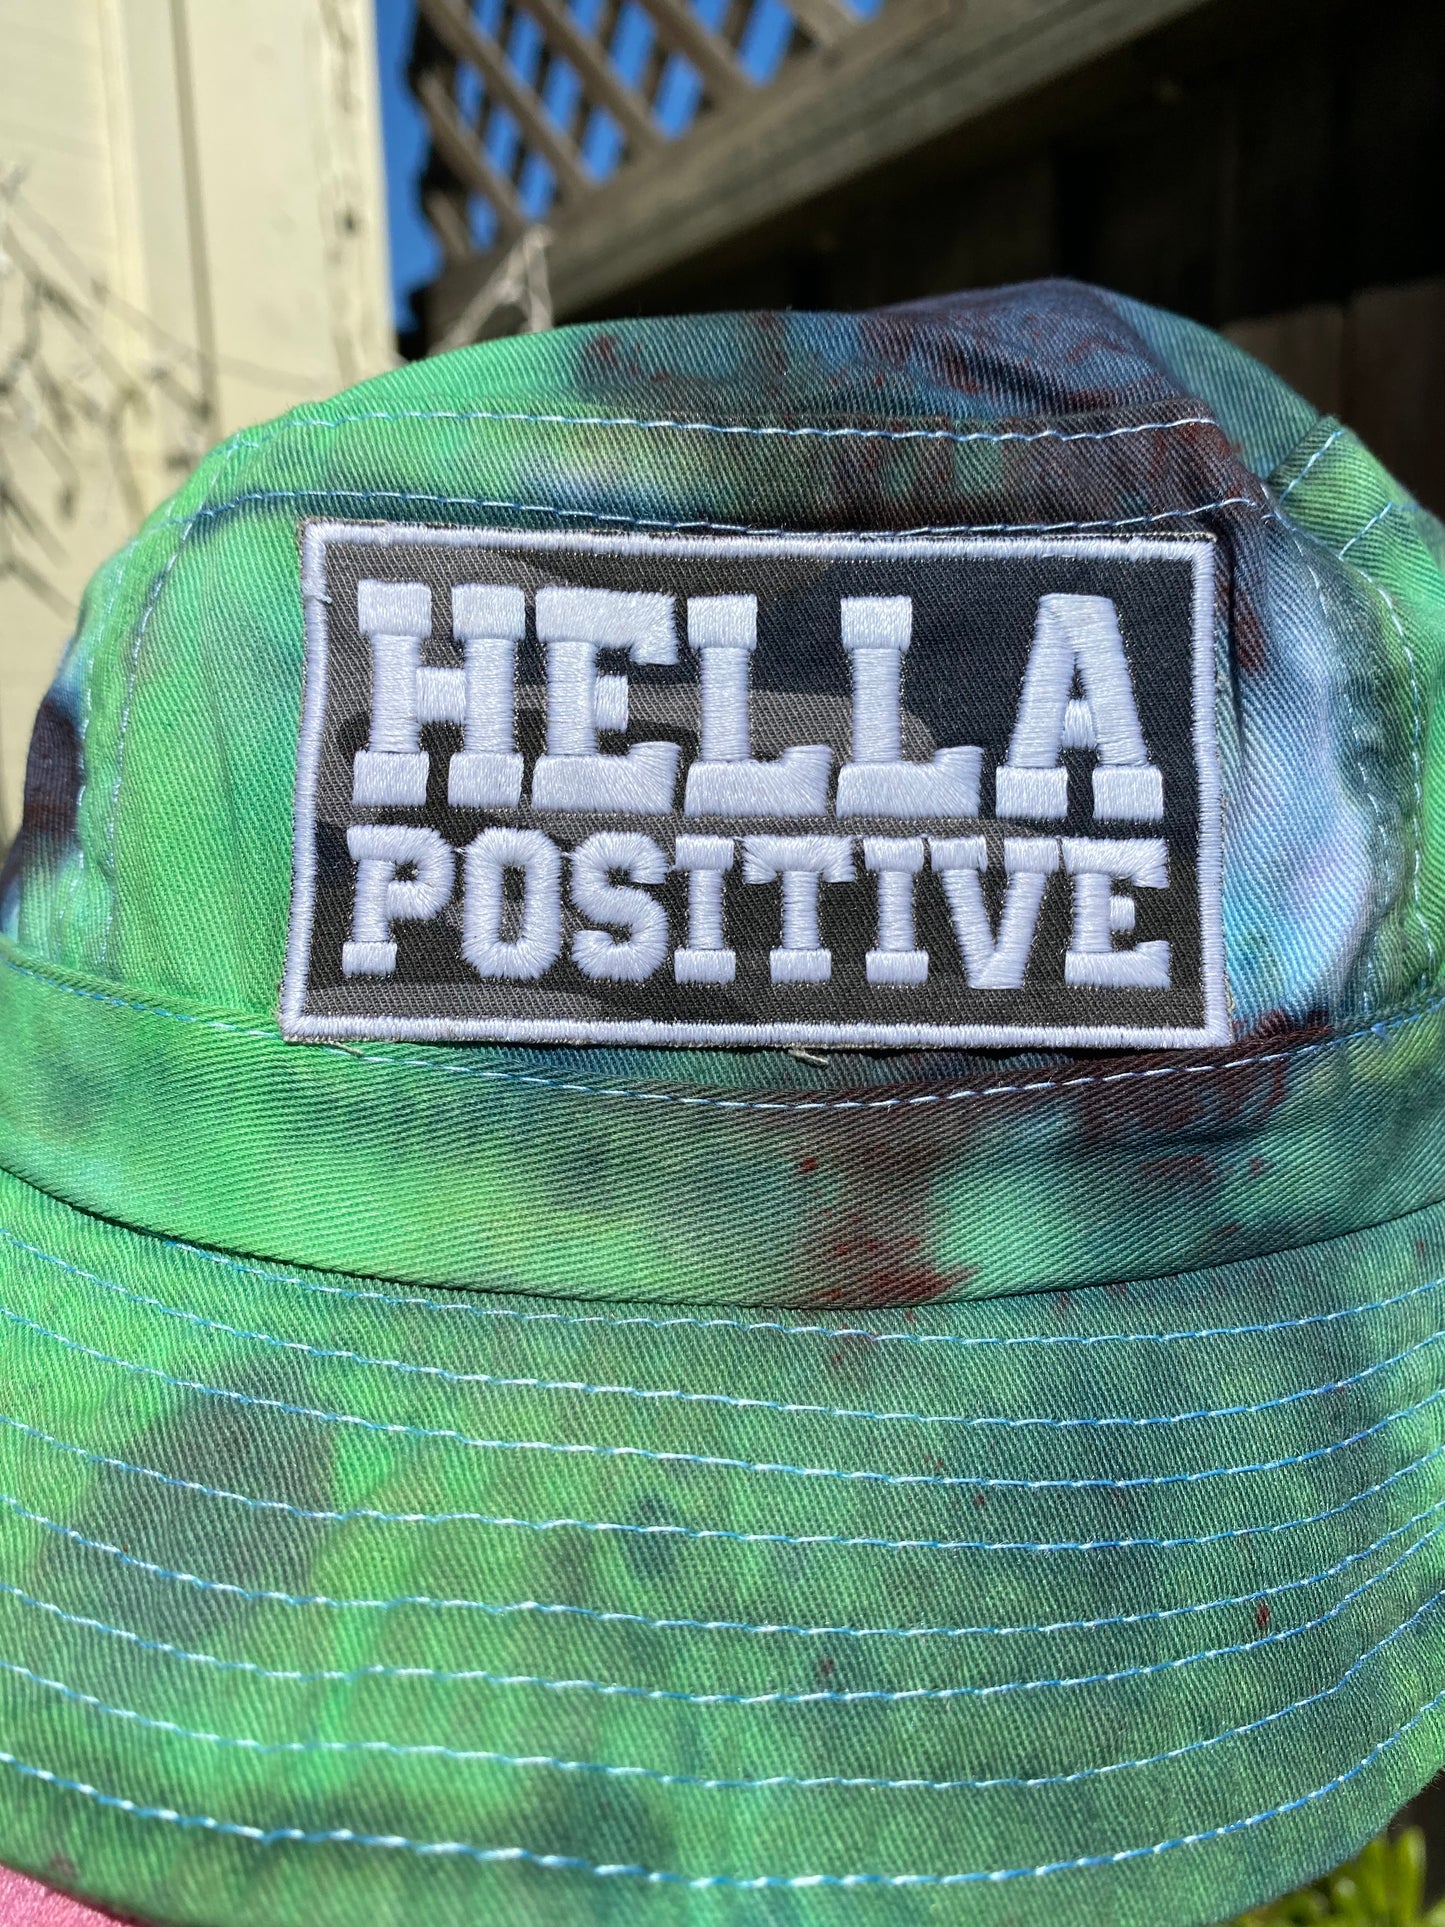 Hella Positive Tie Dye Bucket Hat with Glow in the Dark Camo print patch - Medium